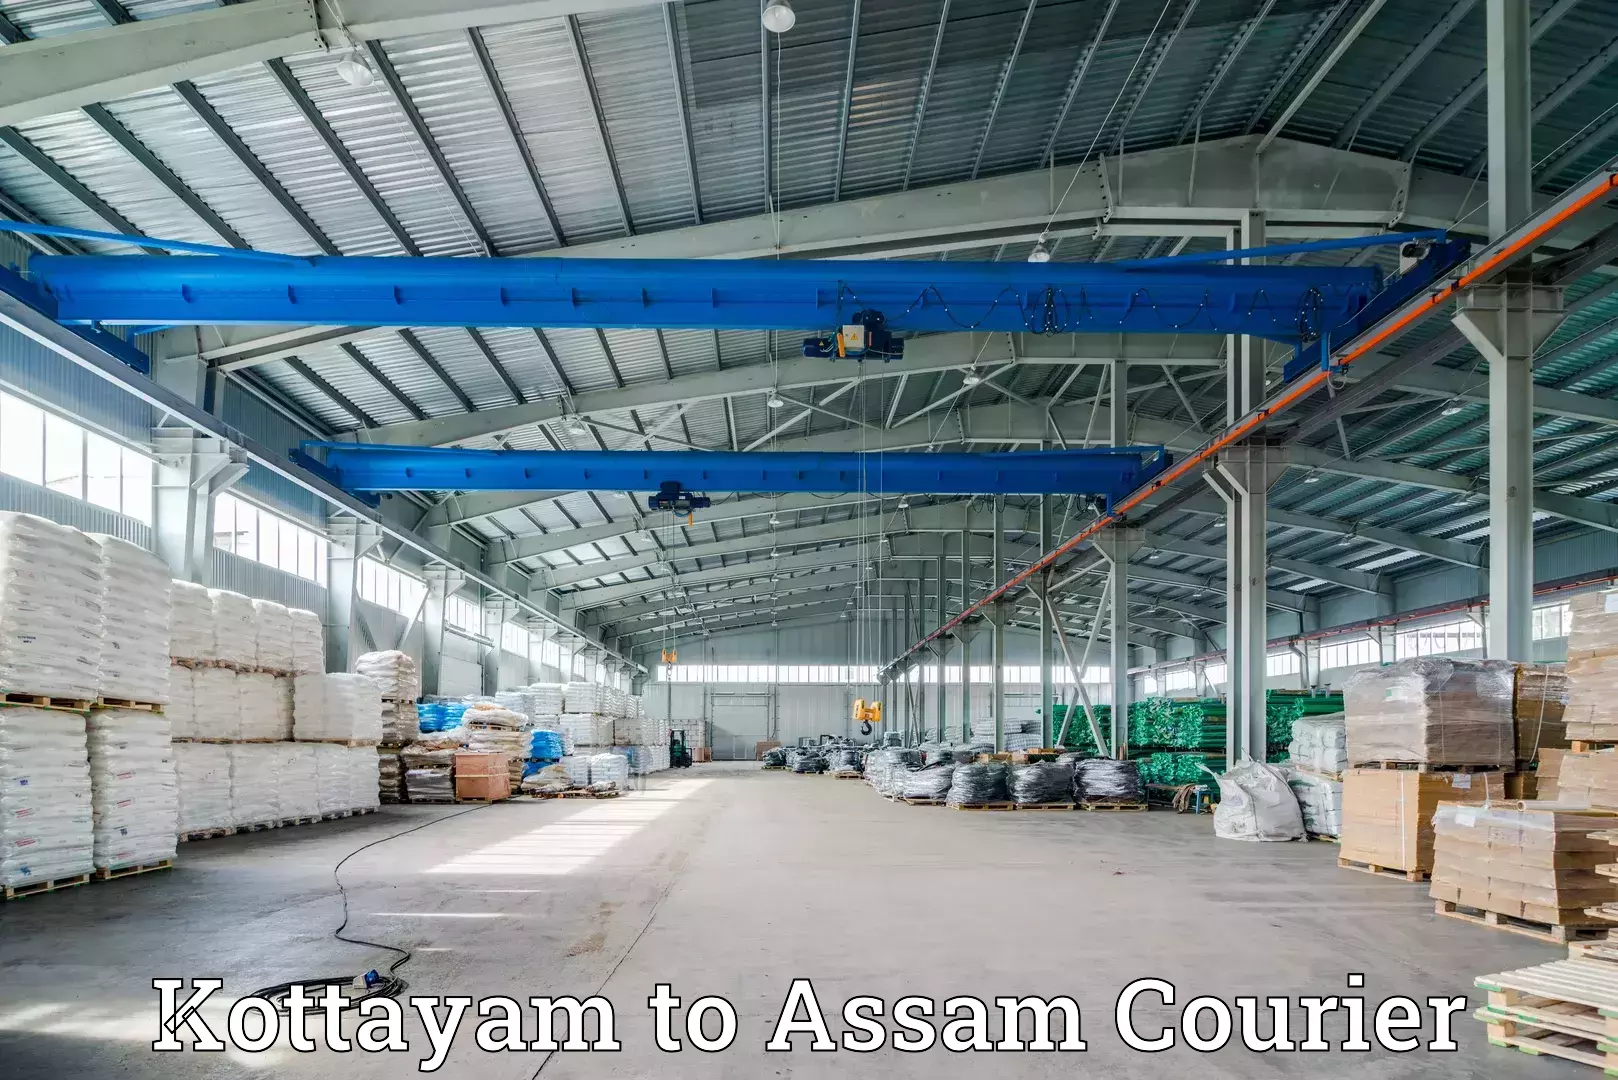 Courier rate comparison Kottayam to Assam